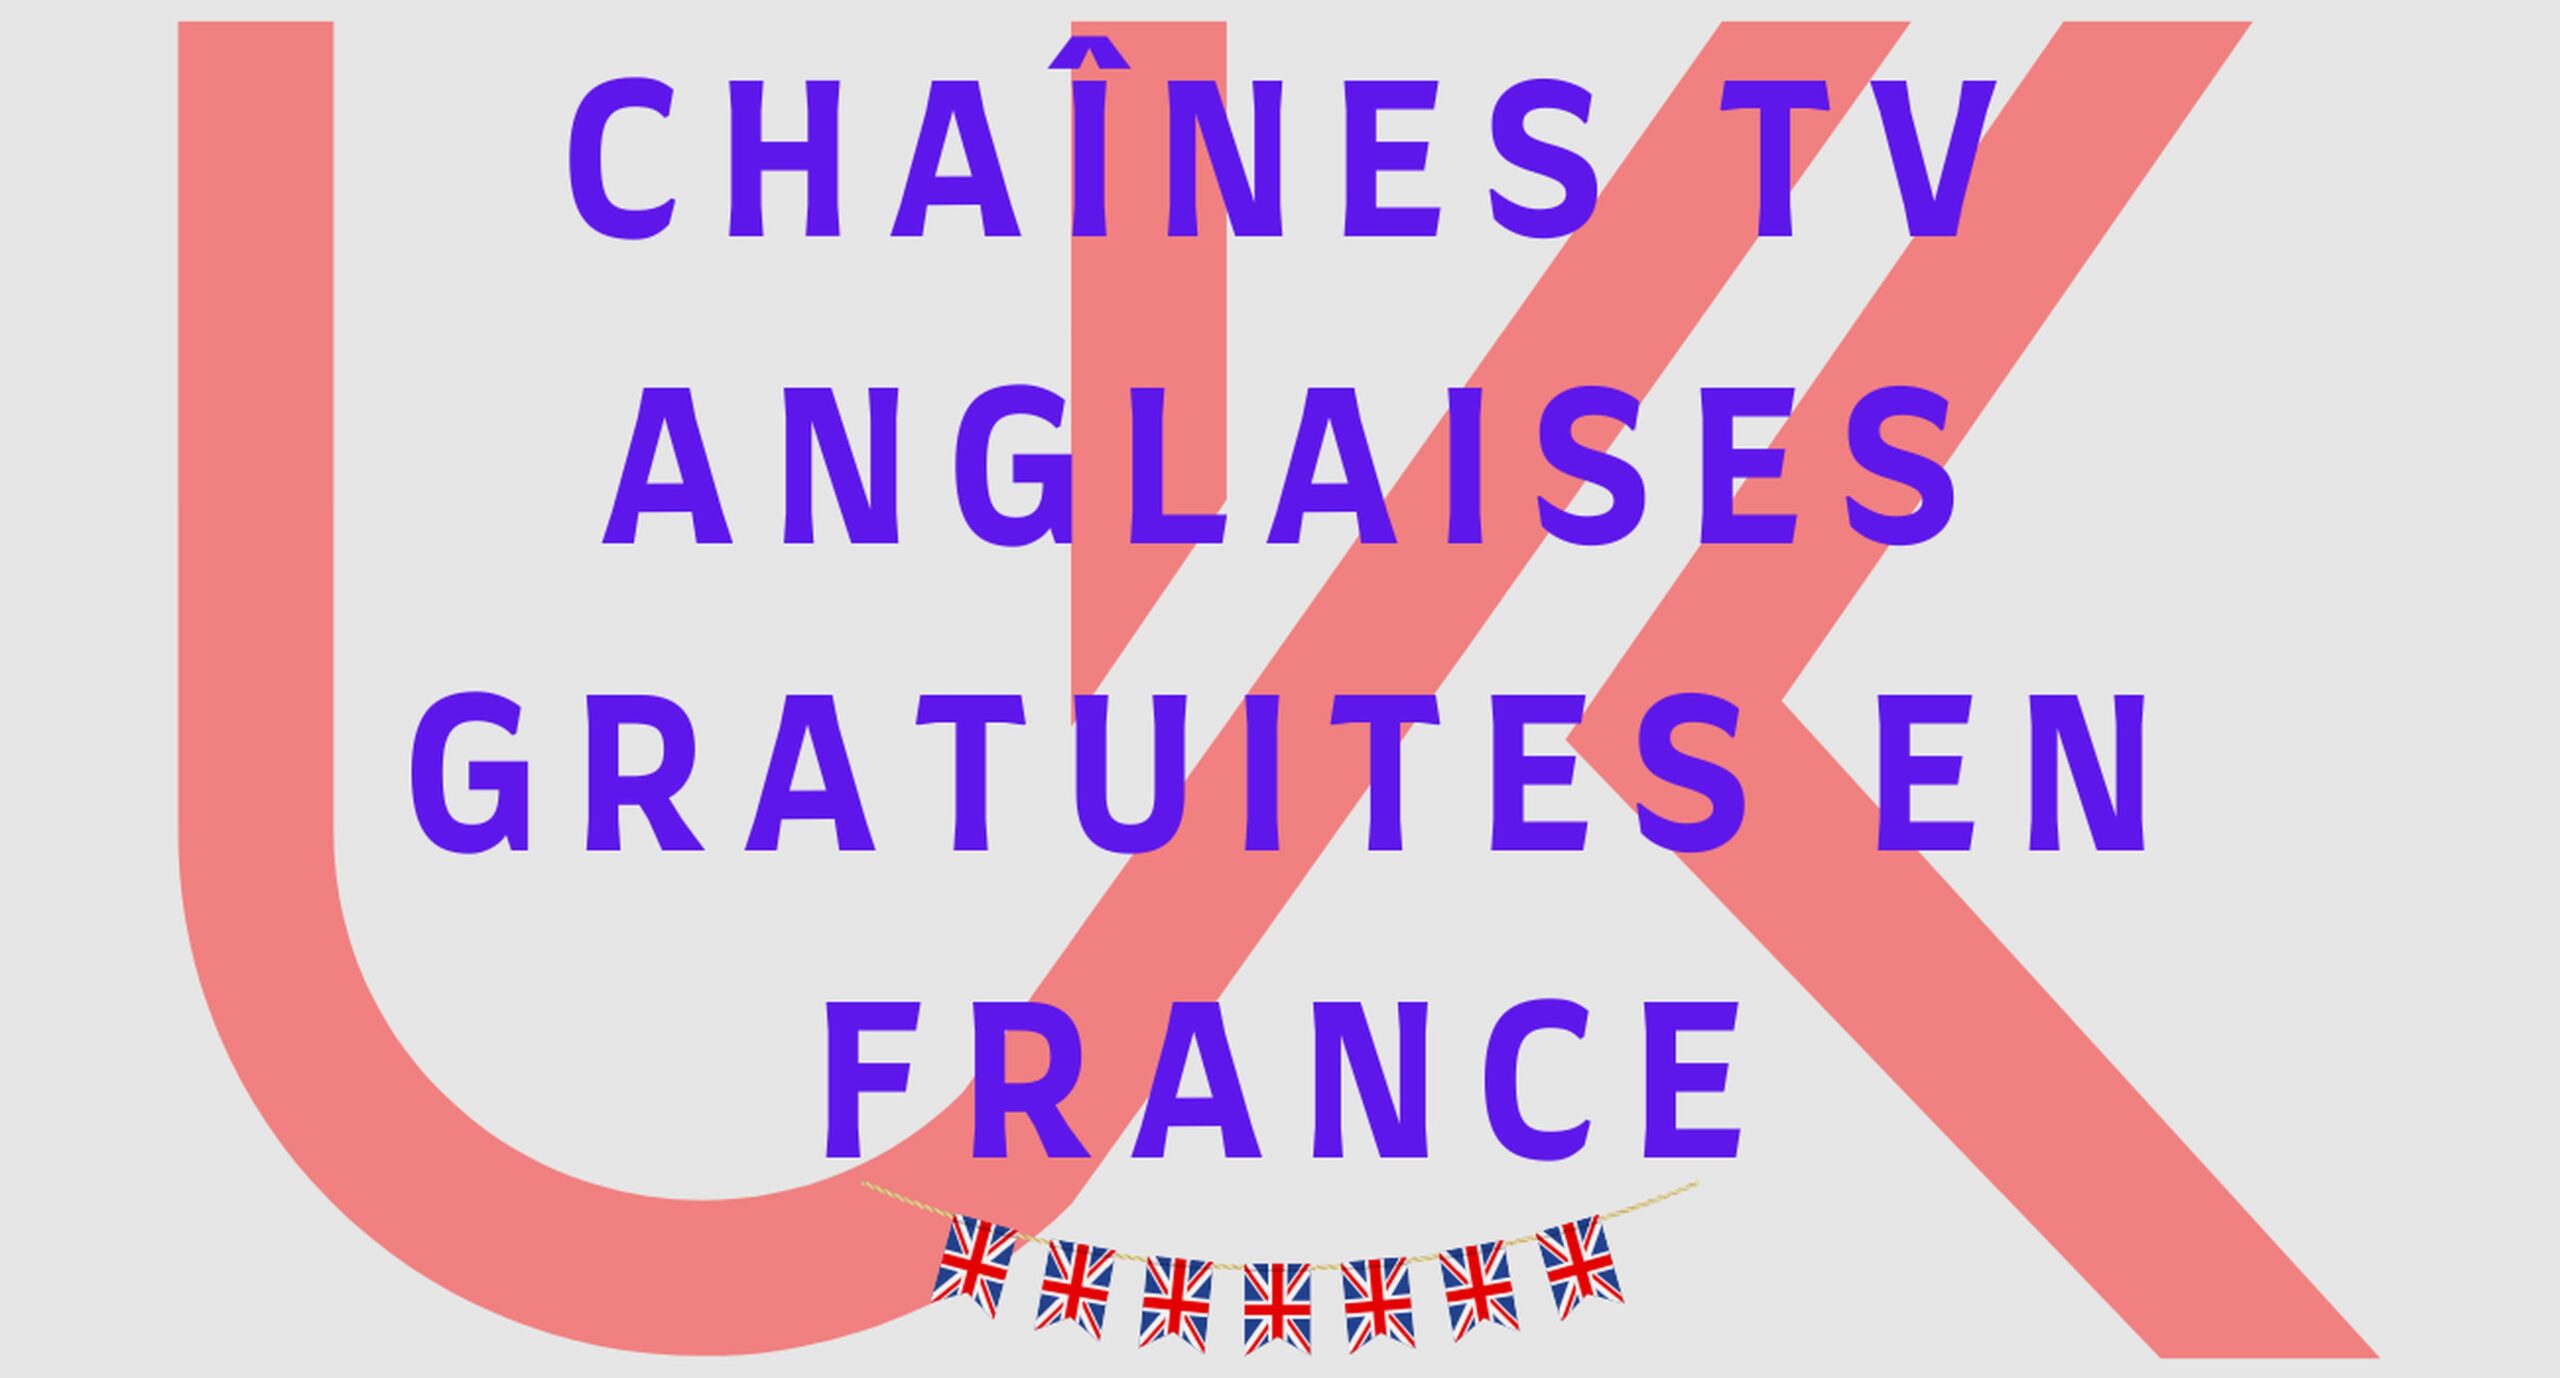 Chaînes TV Anglaises gratuites en France - 55 Chaînes TV disponibles 28